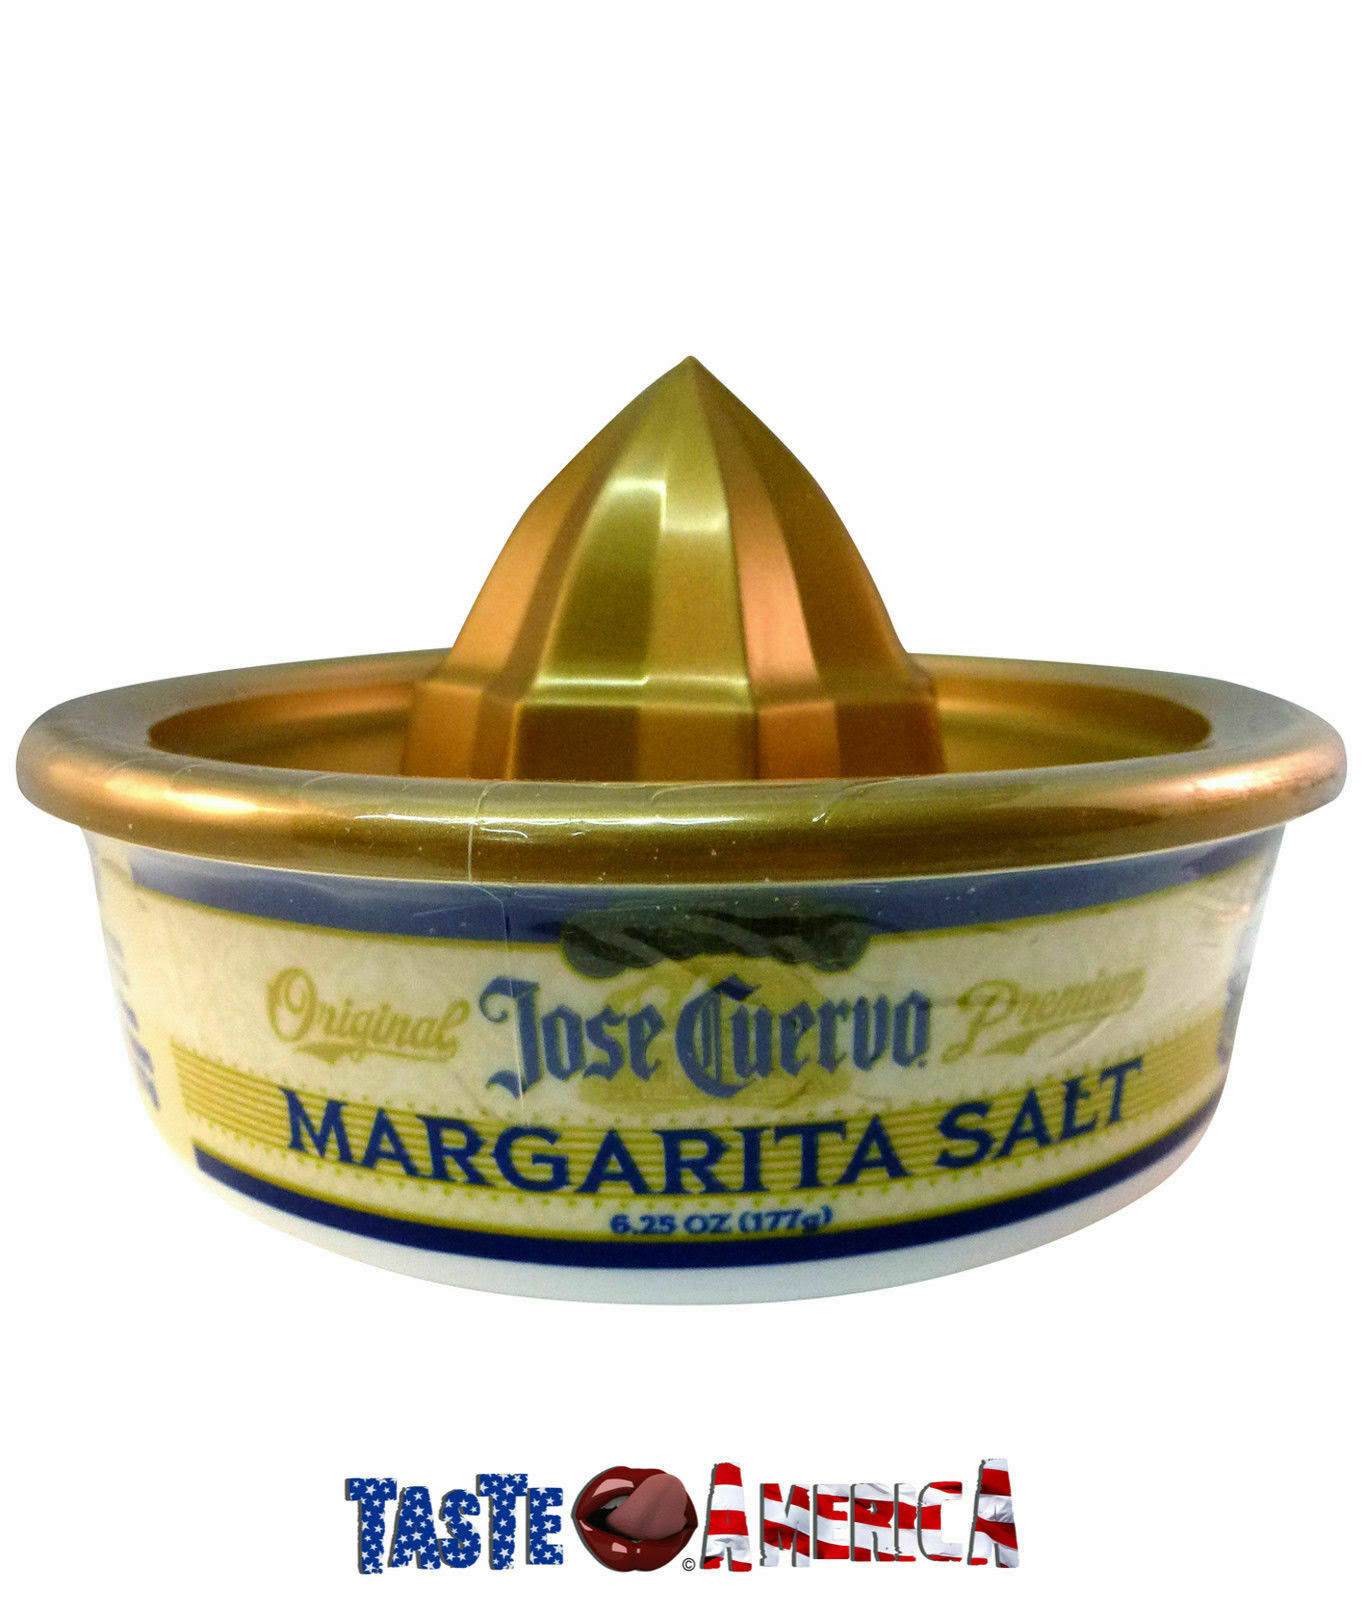 Jose Cuervo Margarita Salt with Juicer